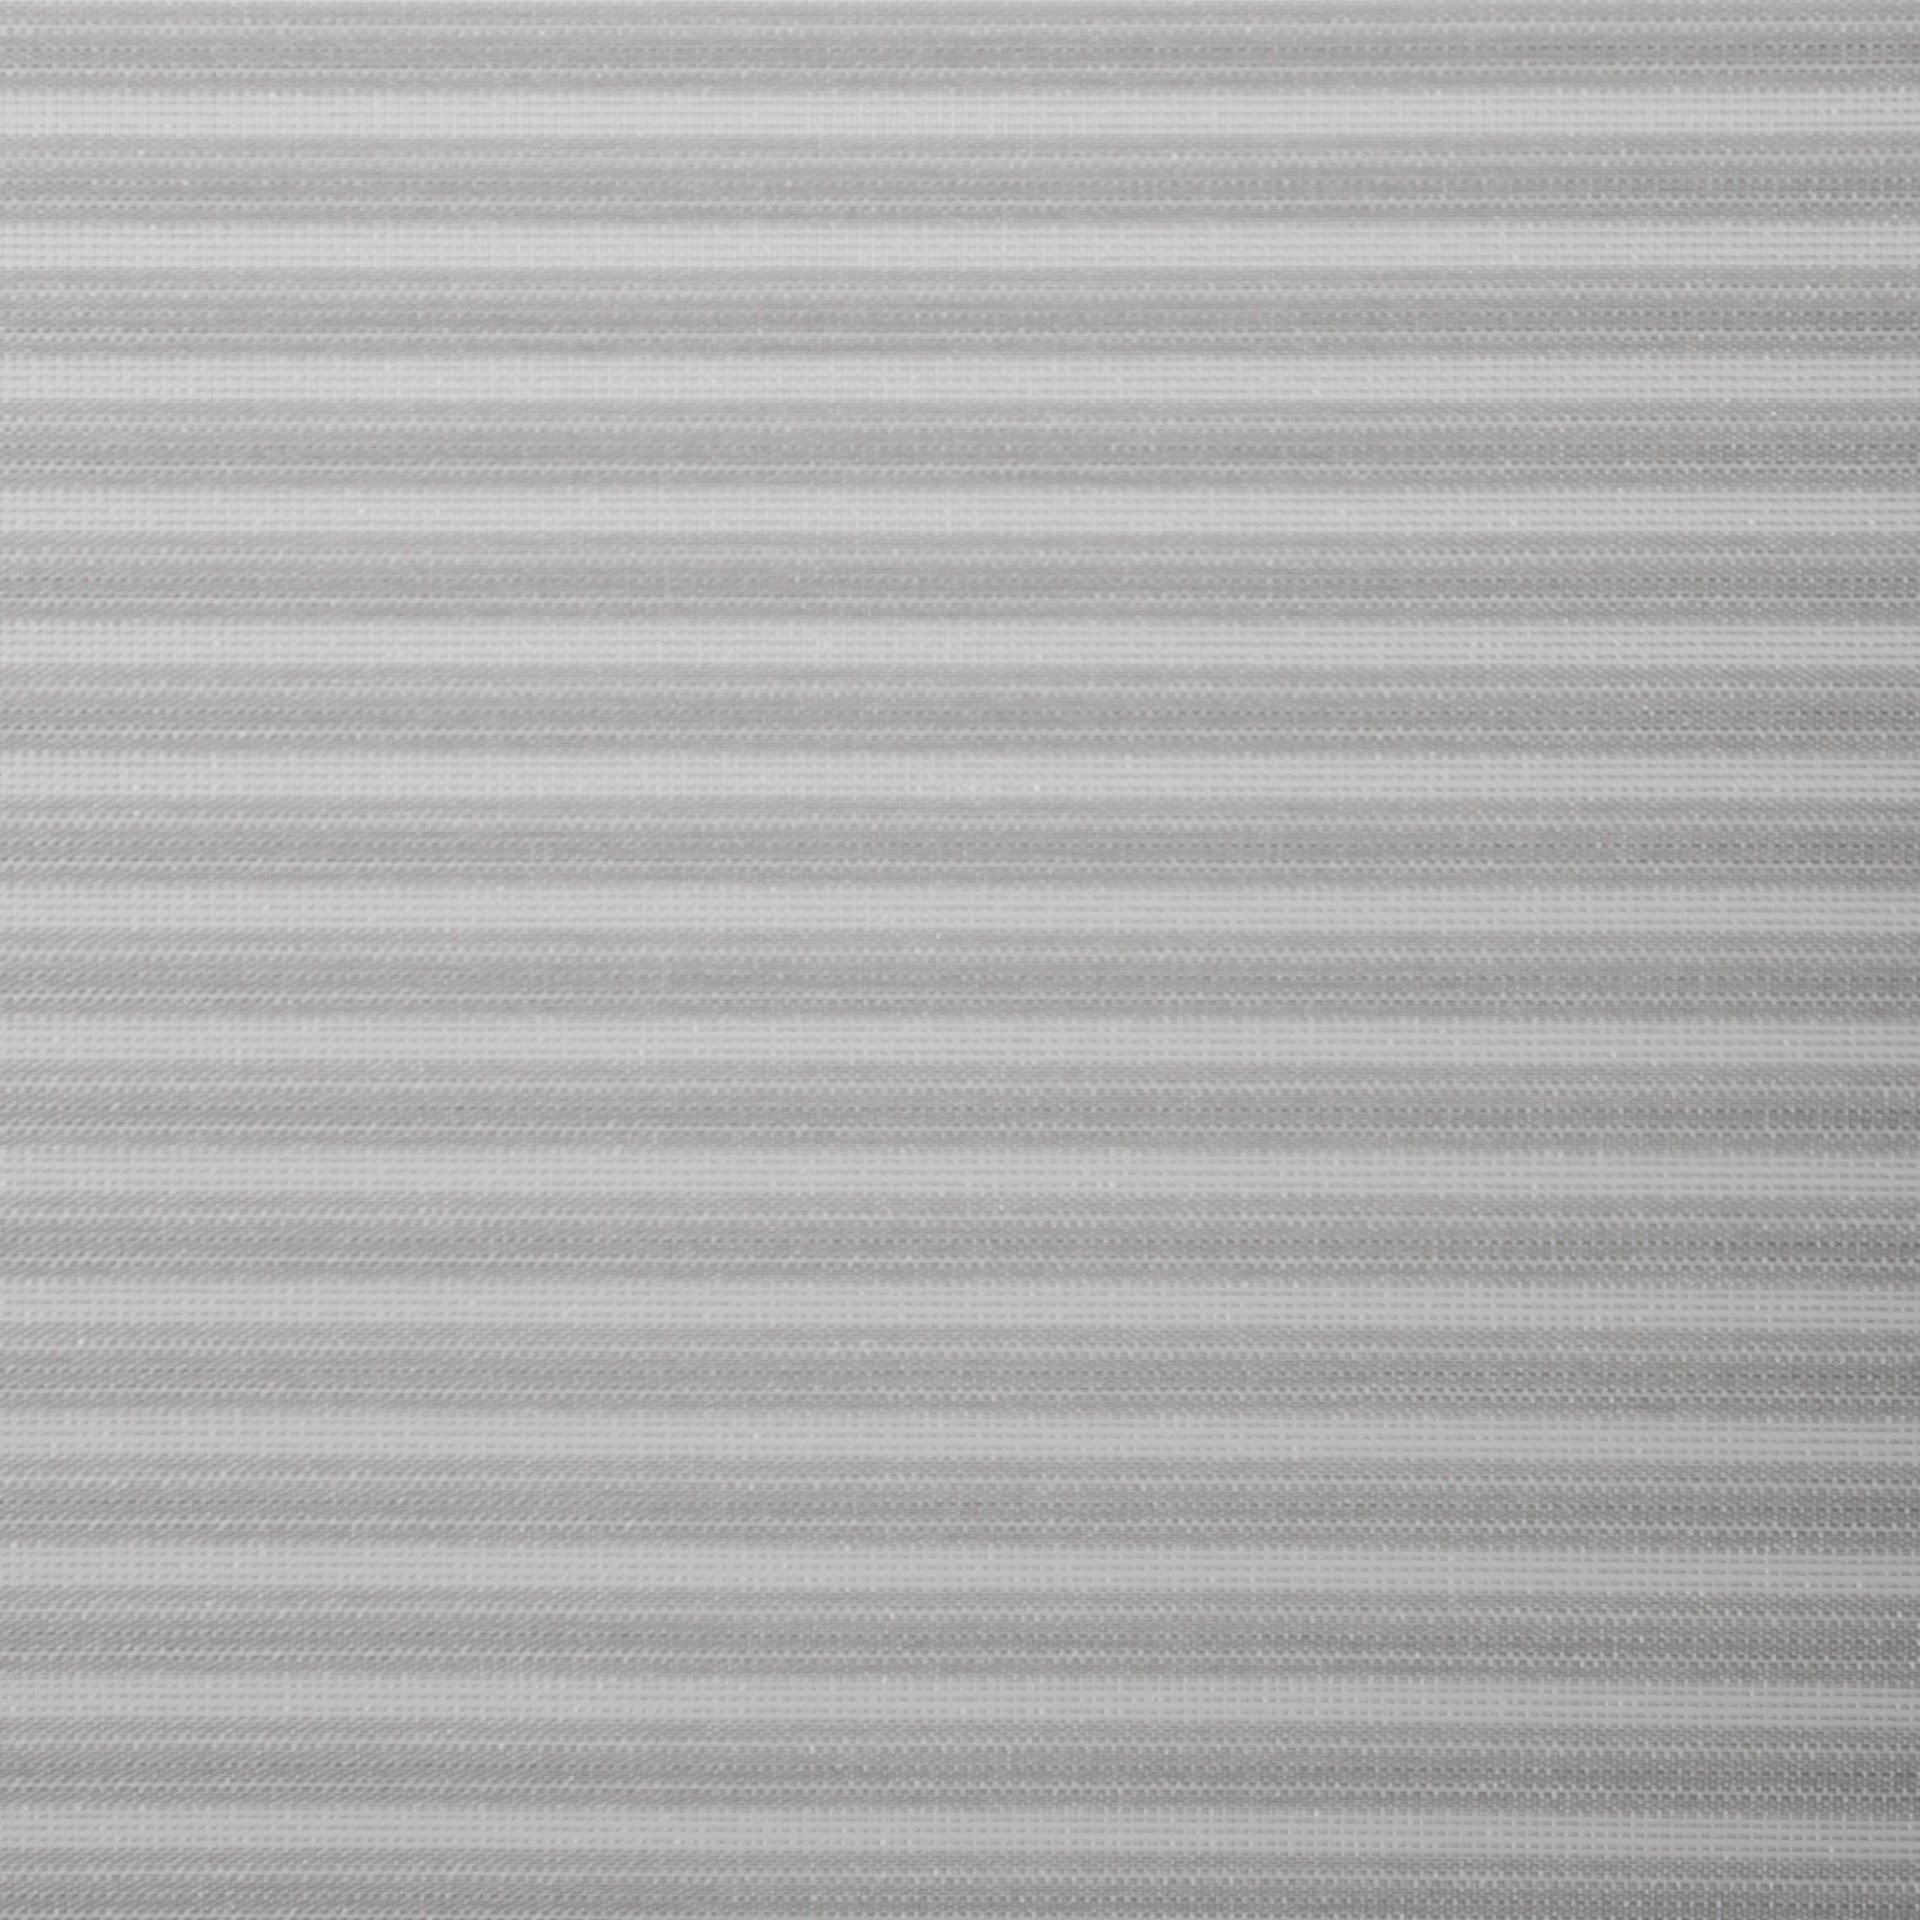 Cebra Translucent Roller Blind Silver Fabric Detail